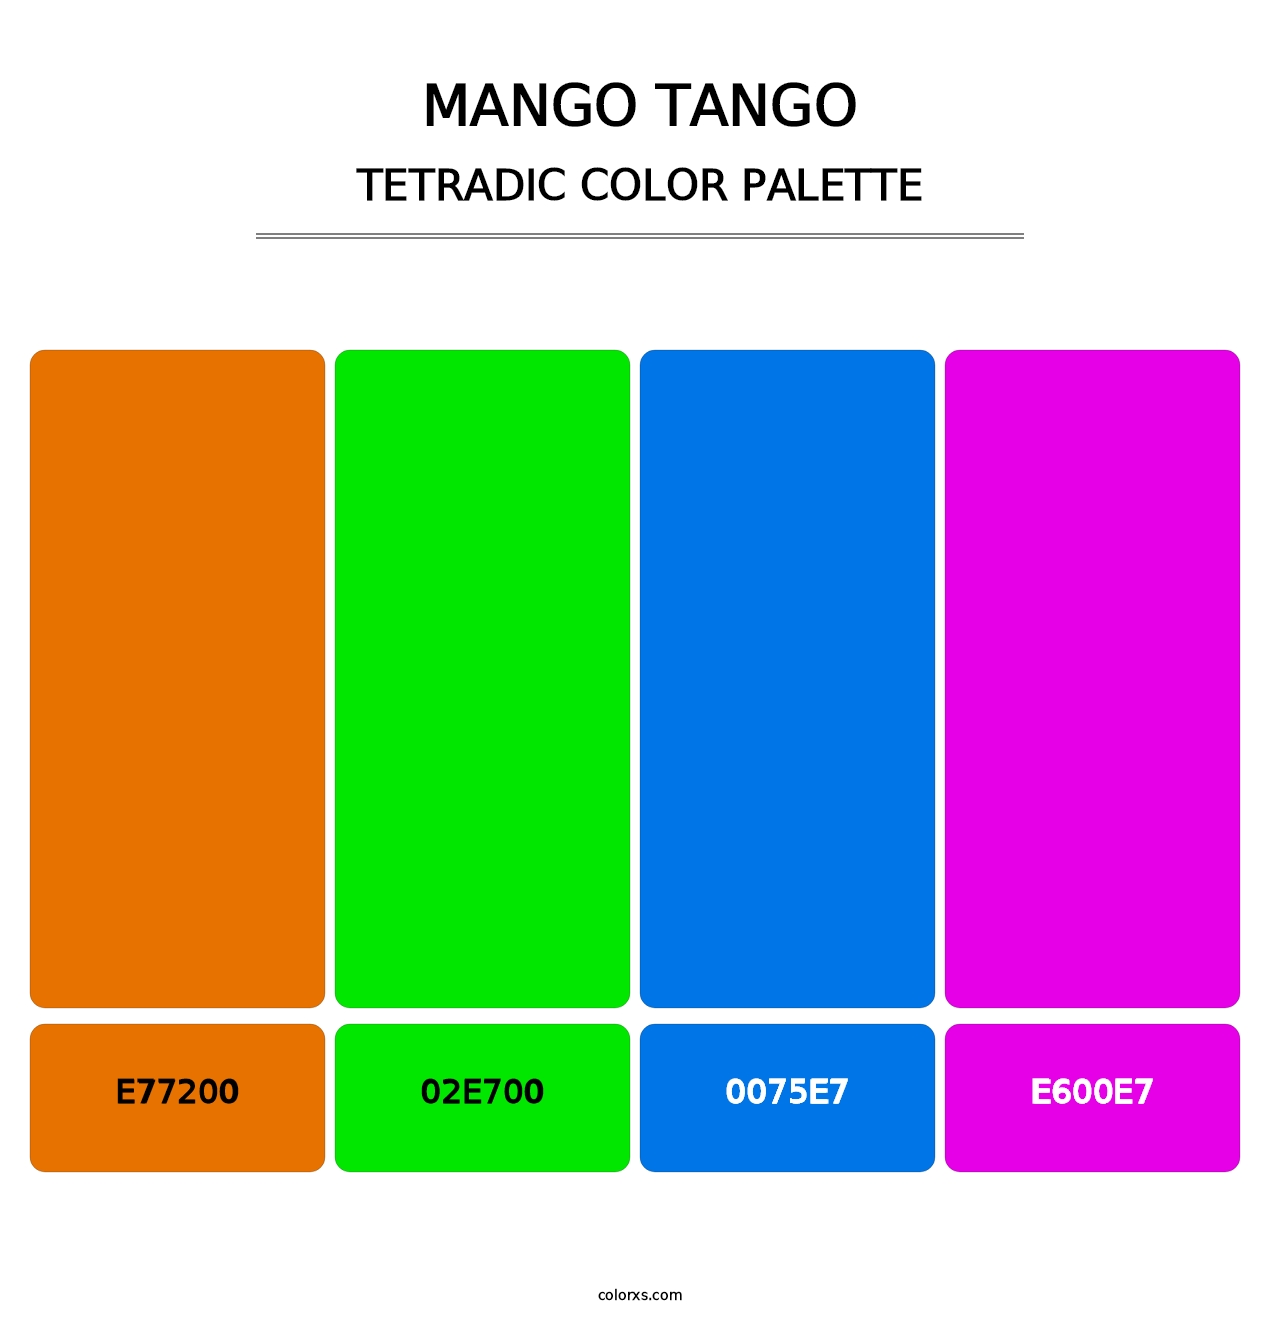 Mango Tango - Tetradic Color Palette